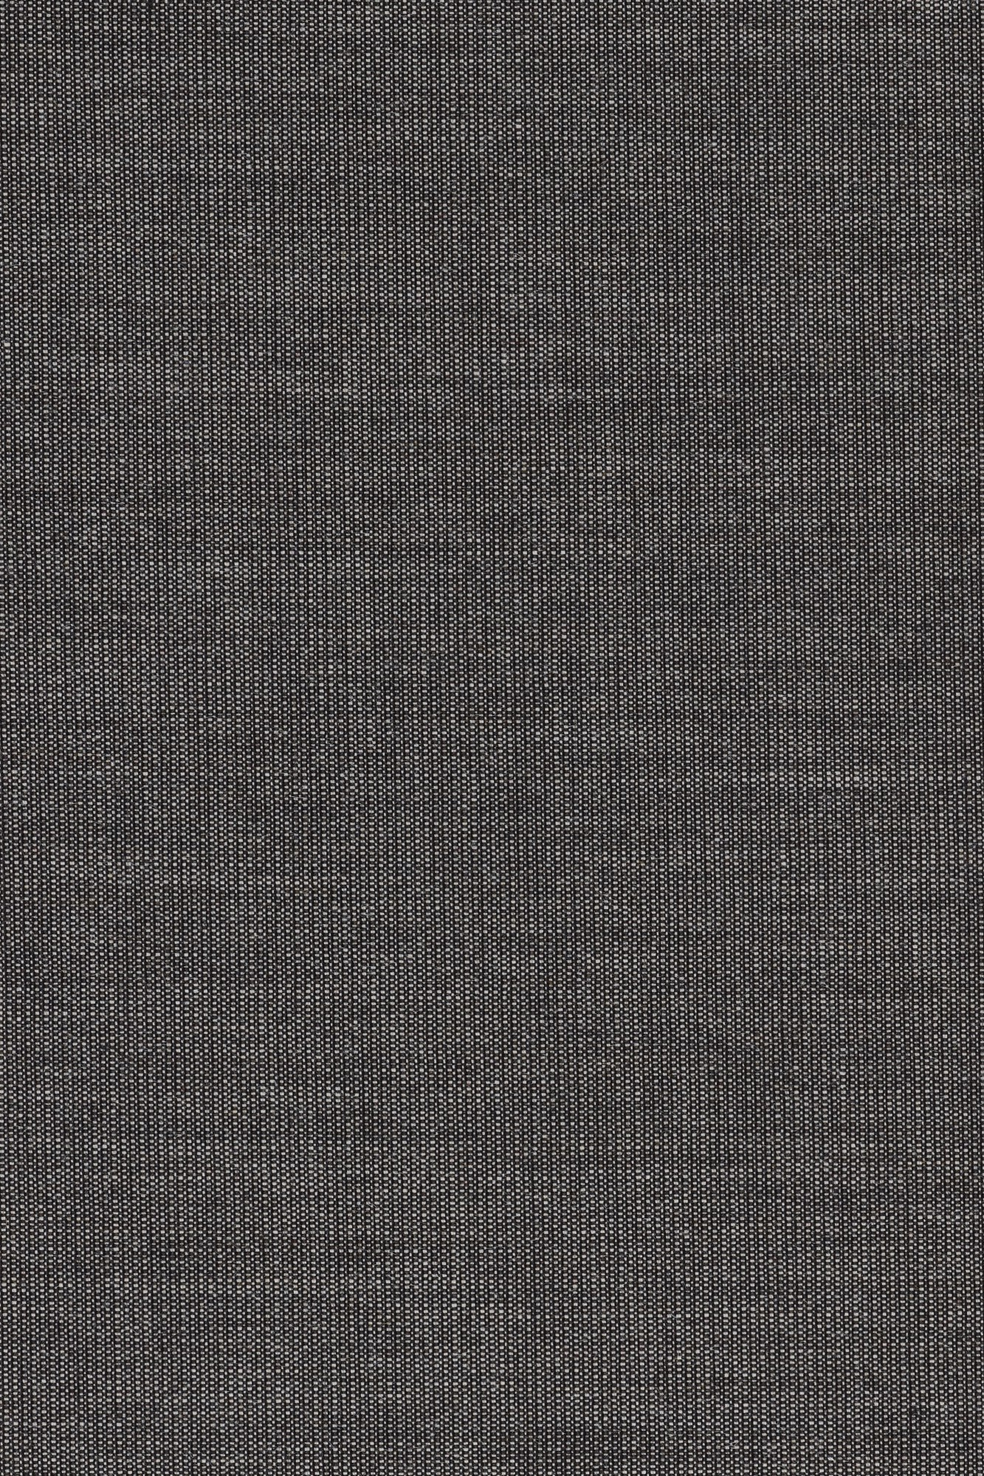 Fabric sample Canvas 2 154 grey